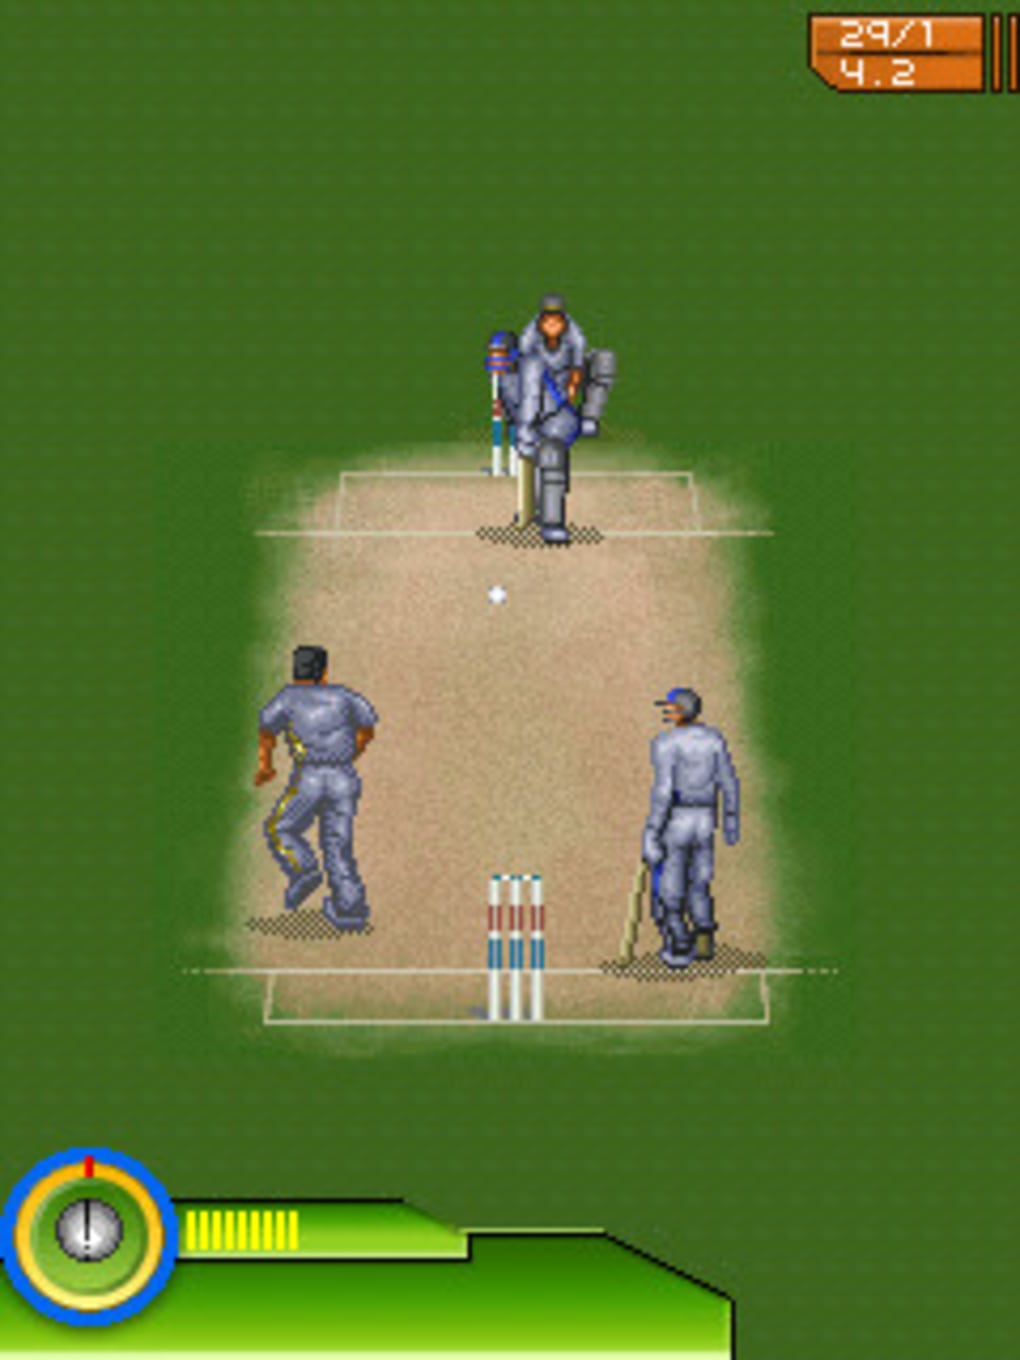 nokia x2 01 cricket games free download